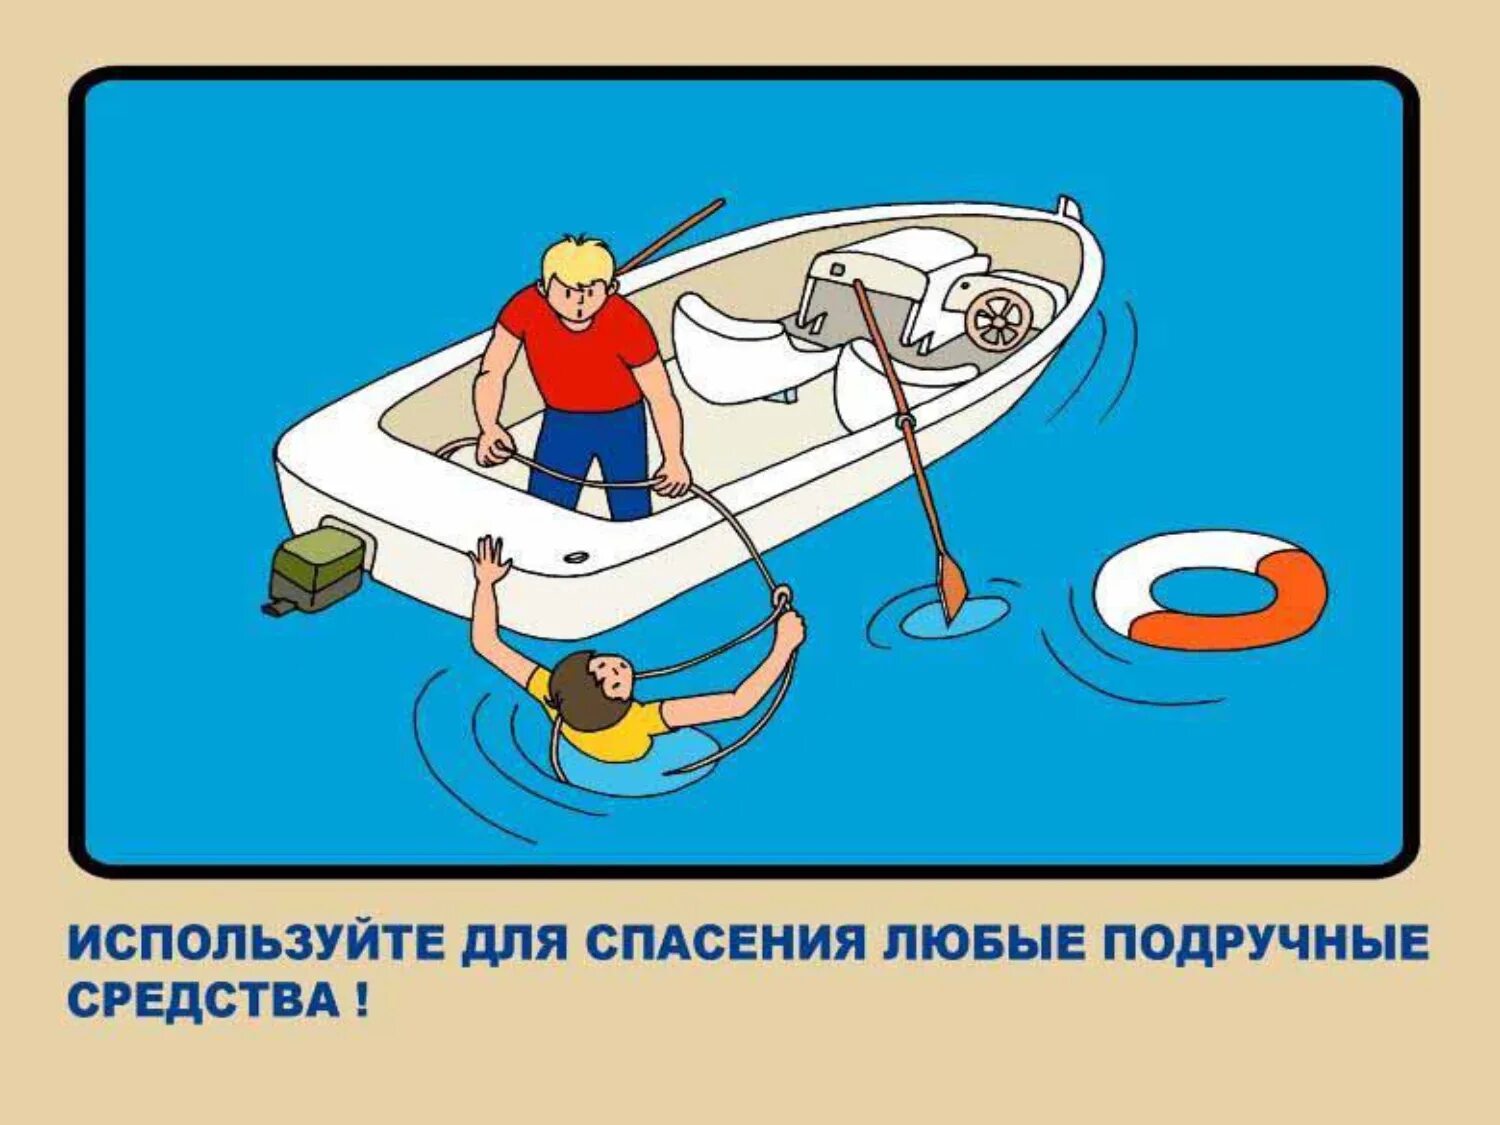 Средства безопасности на воде. Спасение на воде. Плакат спасение на воде. Спасение утопающего на воде с лодки.